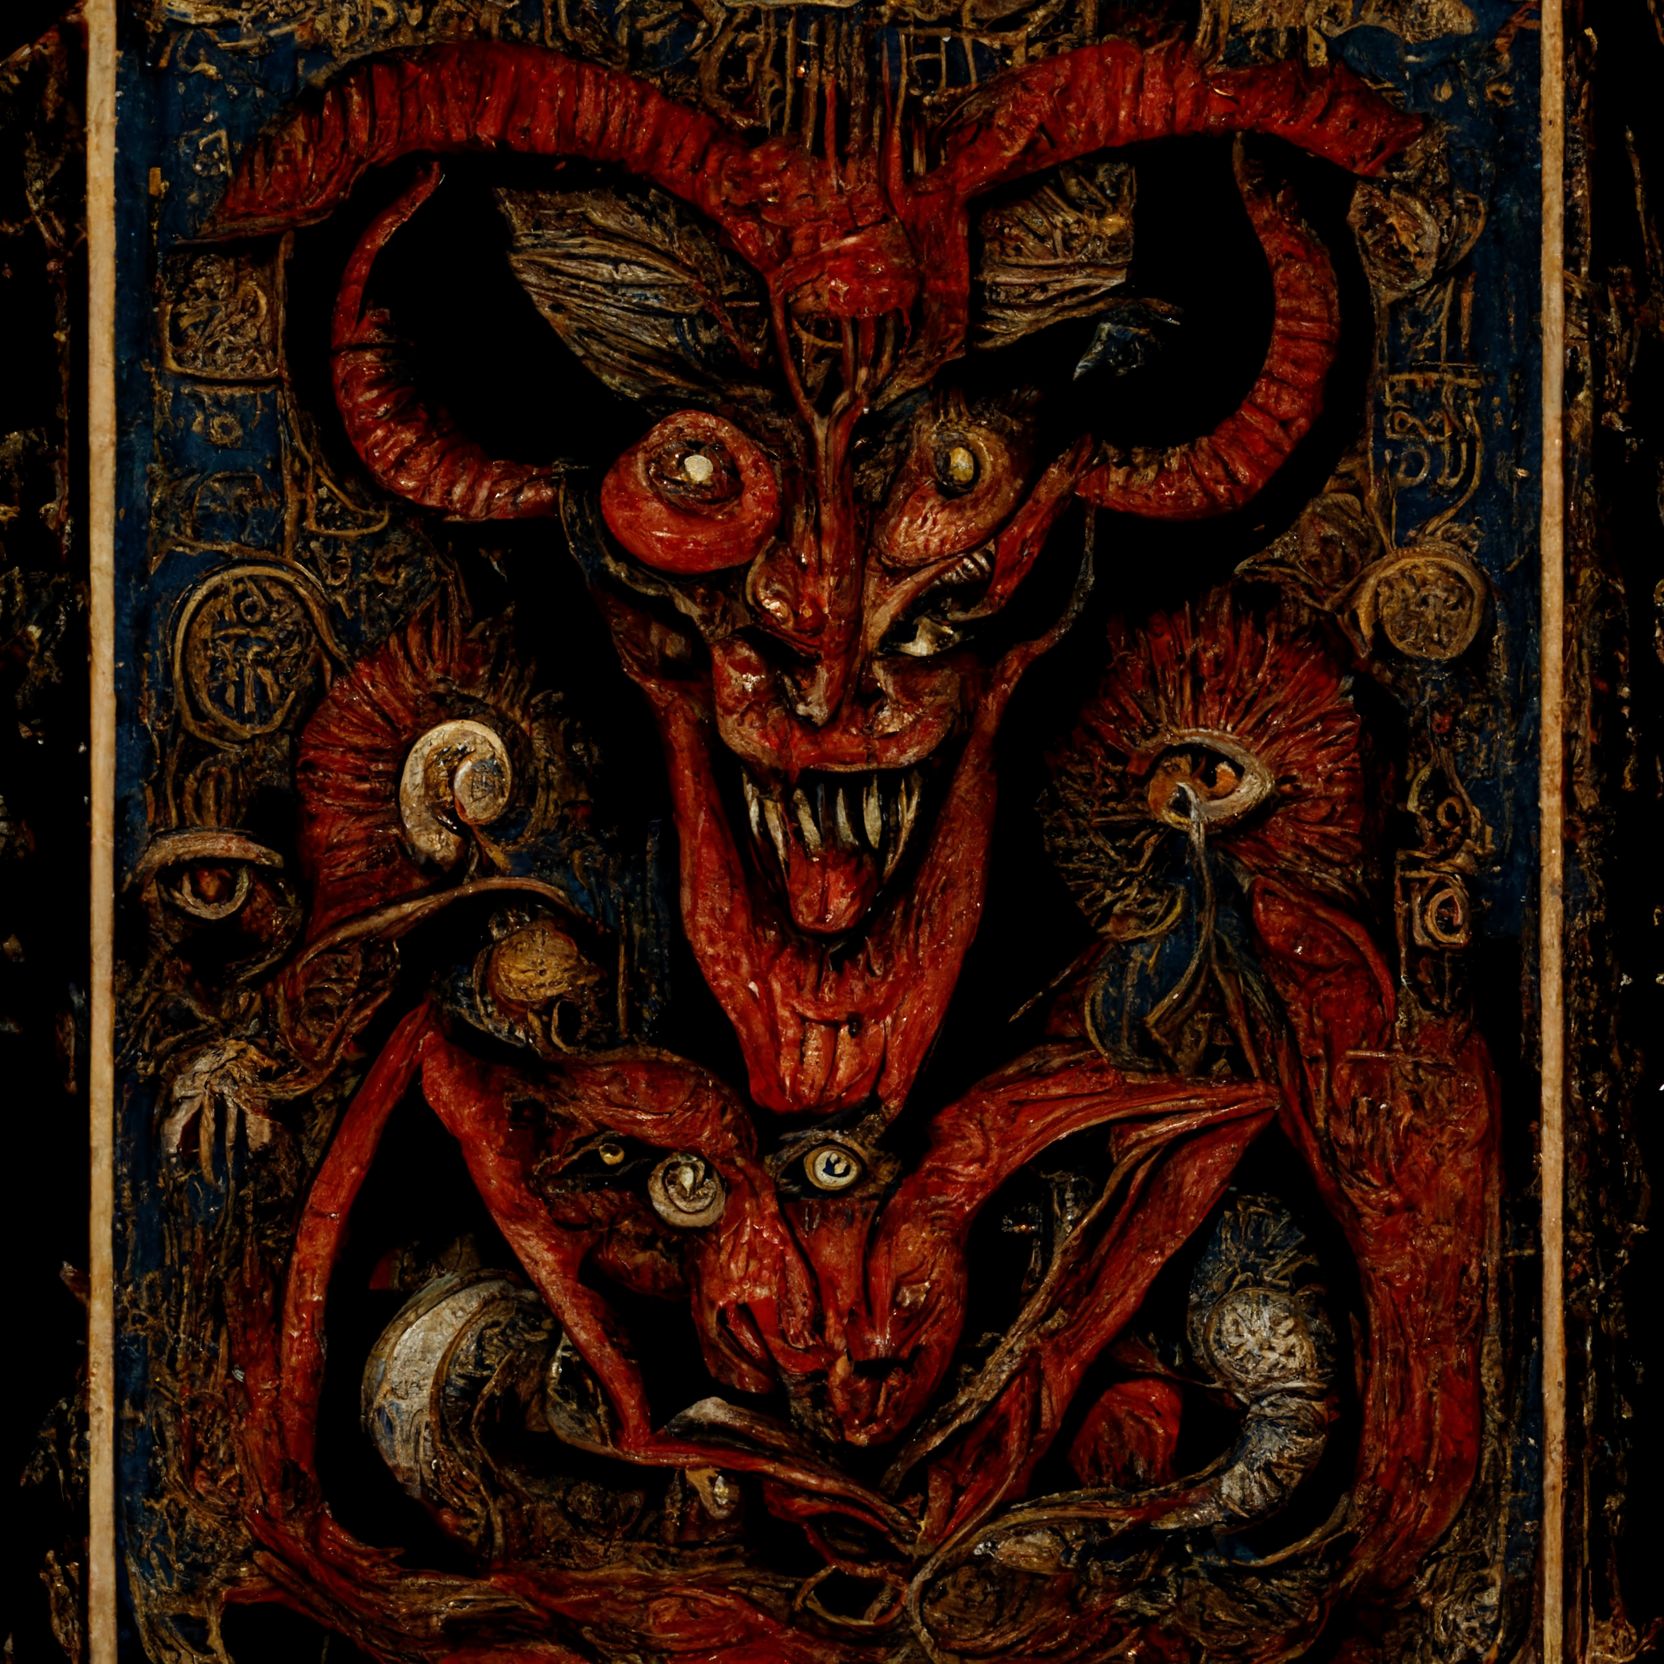 Ulysses_Black_devil_in_the_style_of_a_medieval_manuscript_d8339580-ab97-486d-9ffb-331e6445b355.png